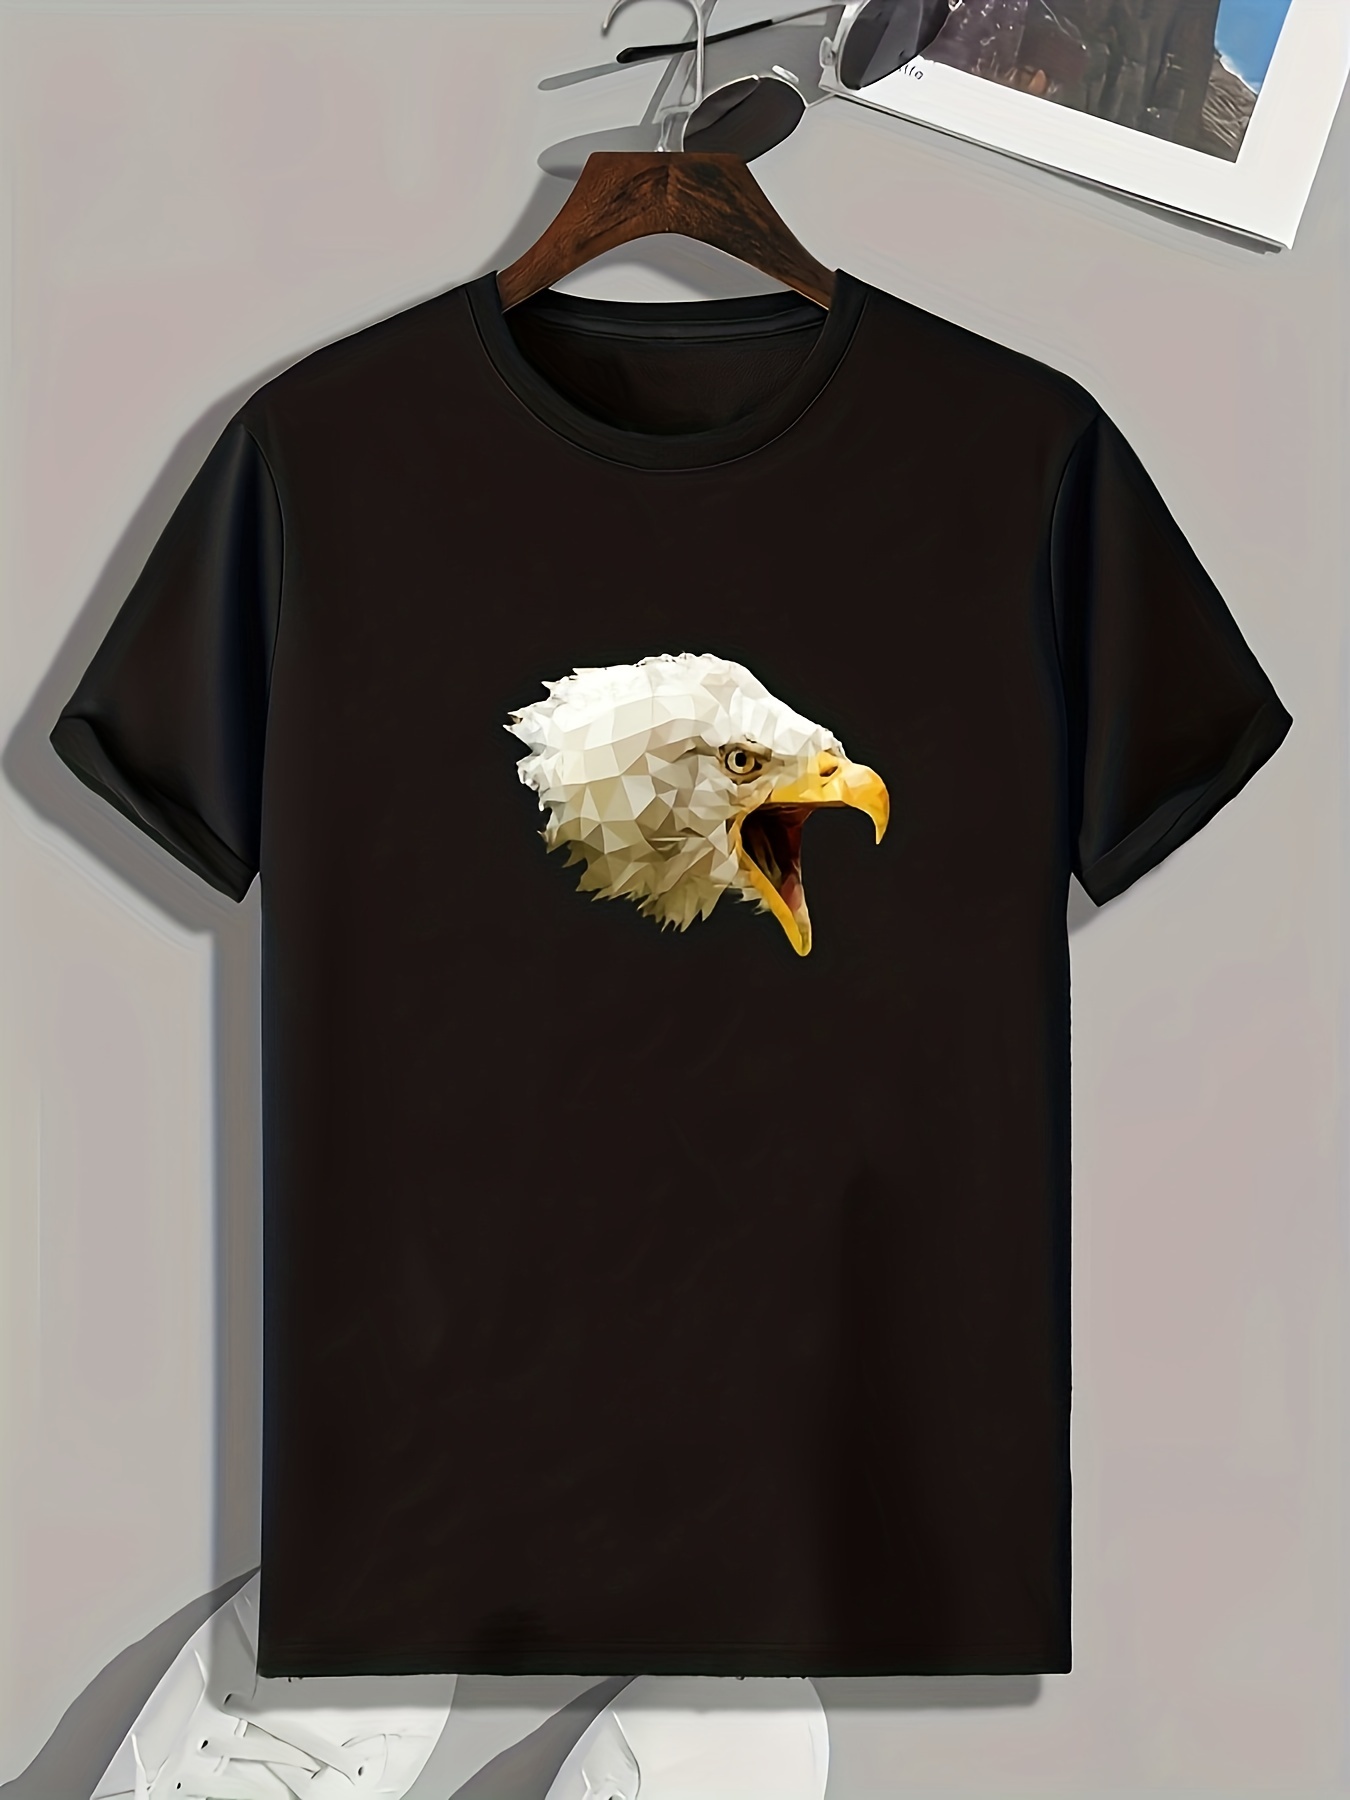 US Indian Bald Eagle Men's Polo Shirts Short Sleeve Sports Golf Shirt  Casual T-Shirt Tee Tops